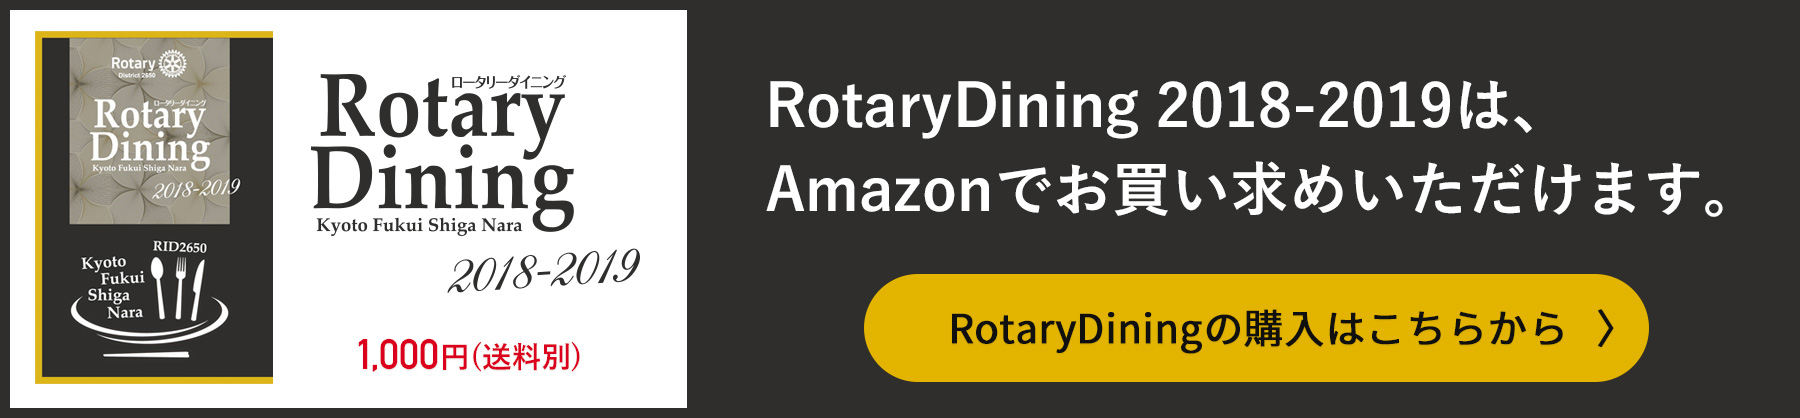 RotaryDining2018-2019 Amazonで販売中